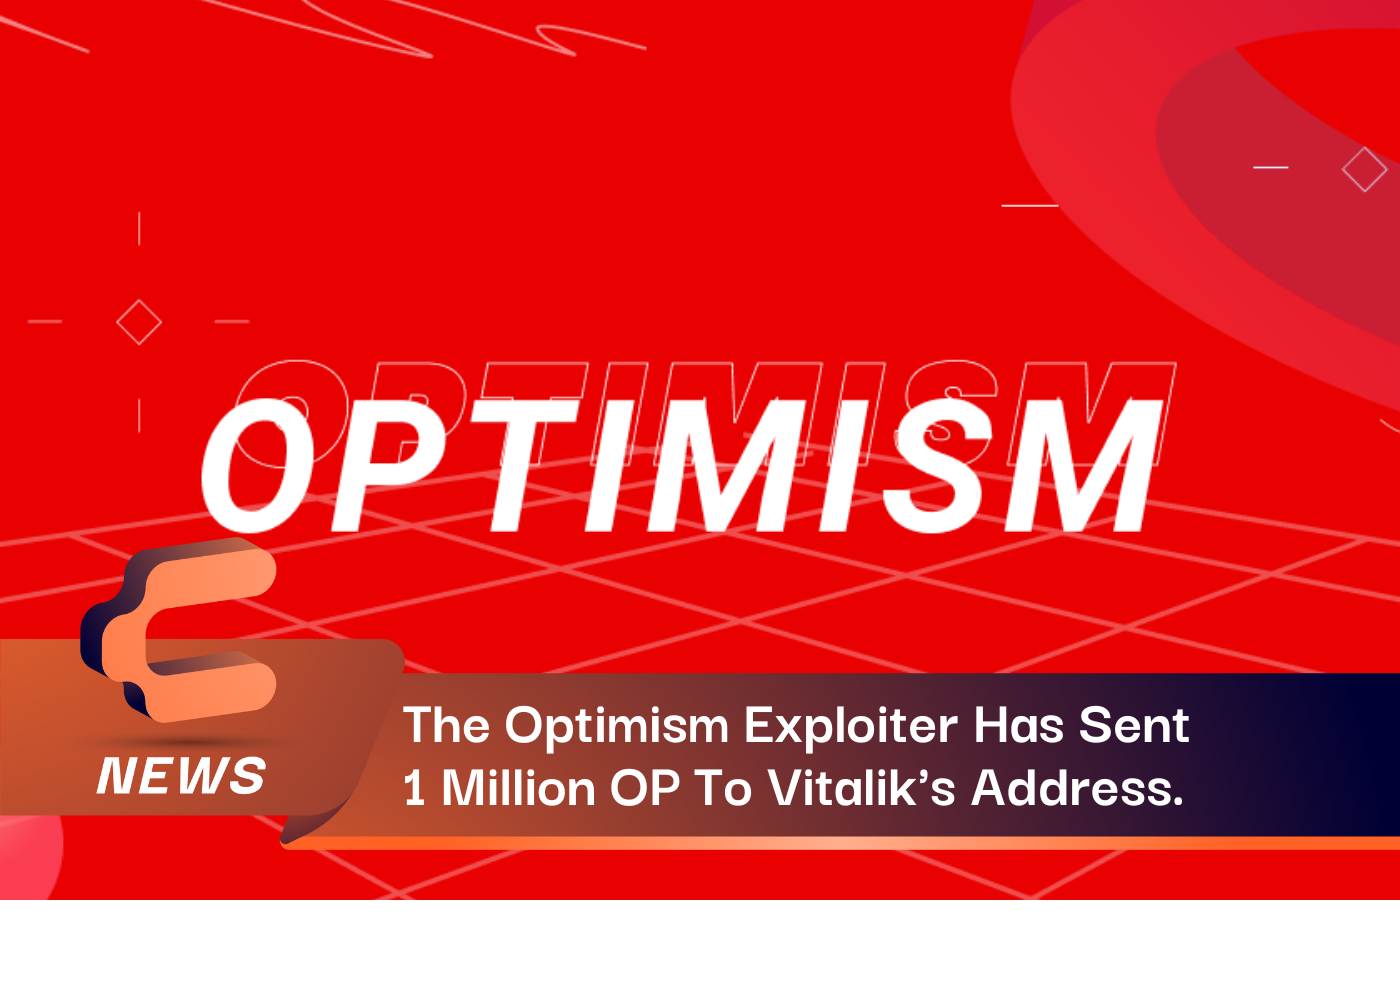 The Optimism Exploiter Has Sent 1 Million OP To Vitalik's Address.